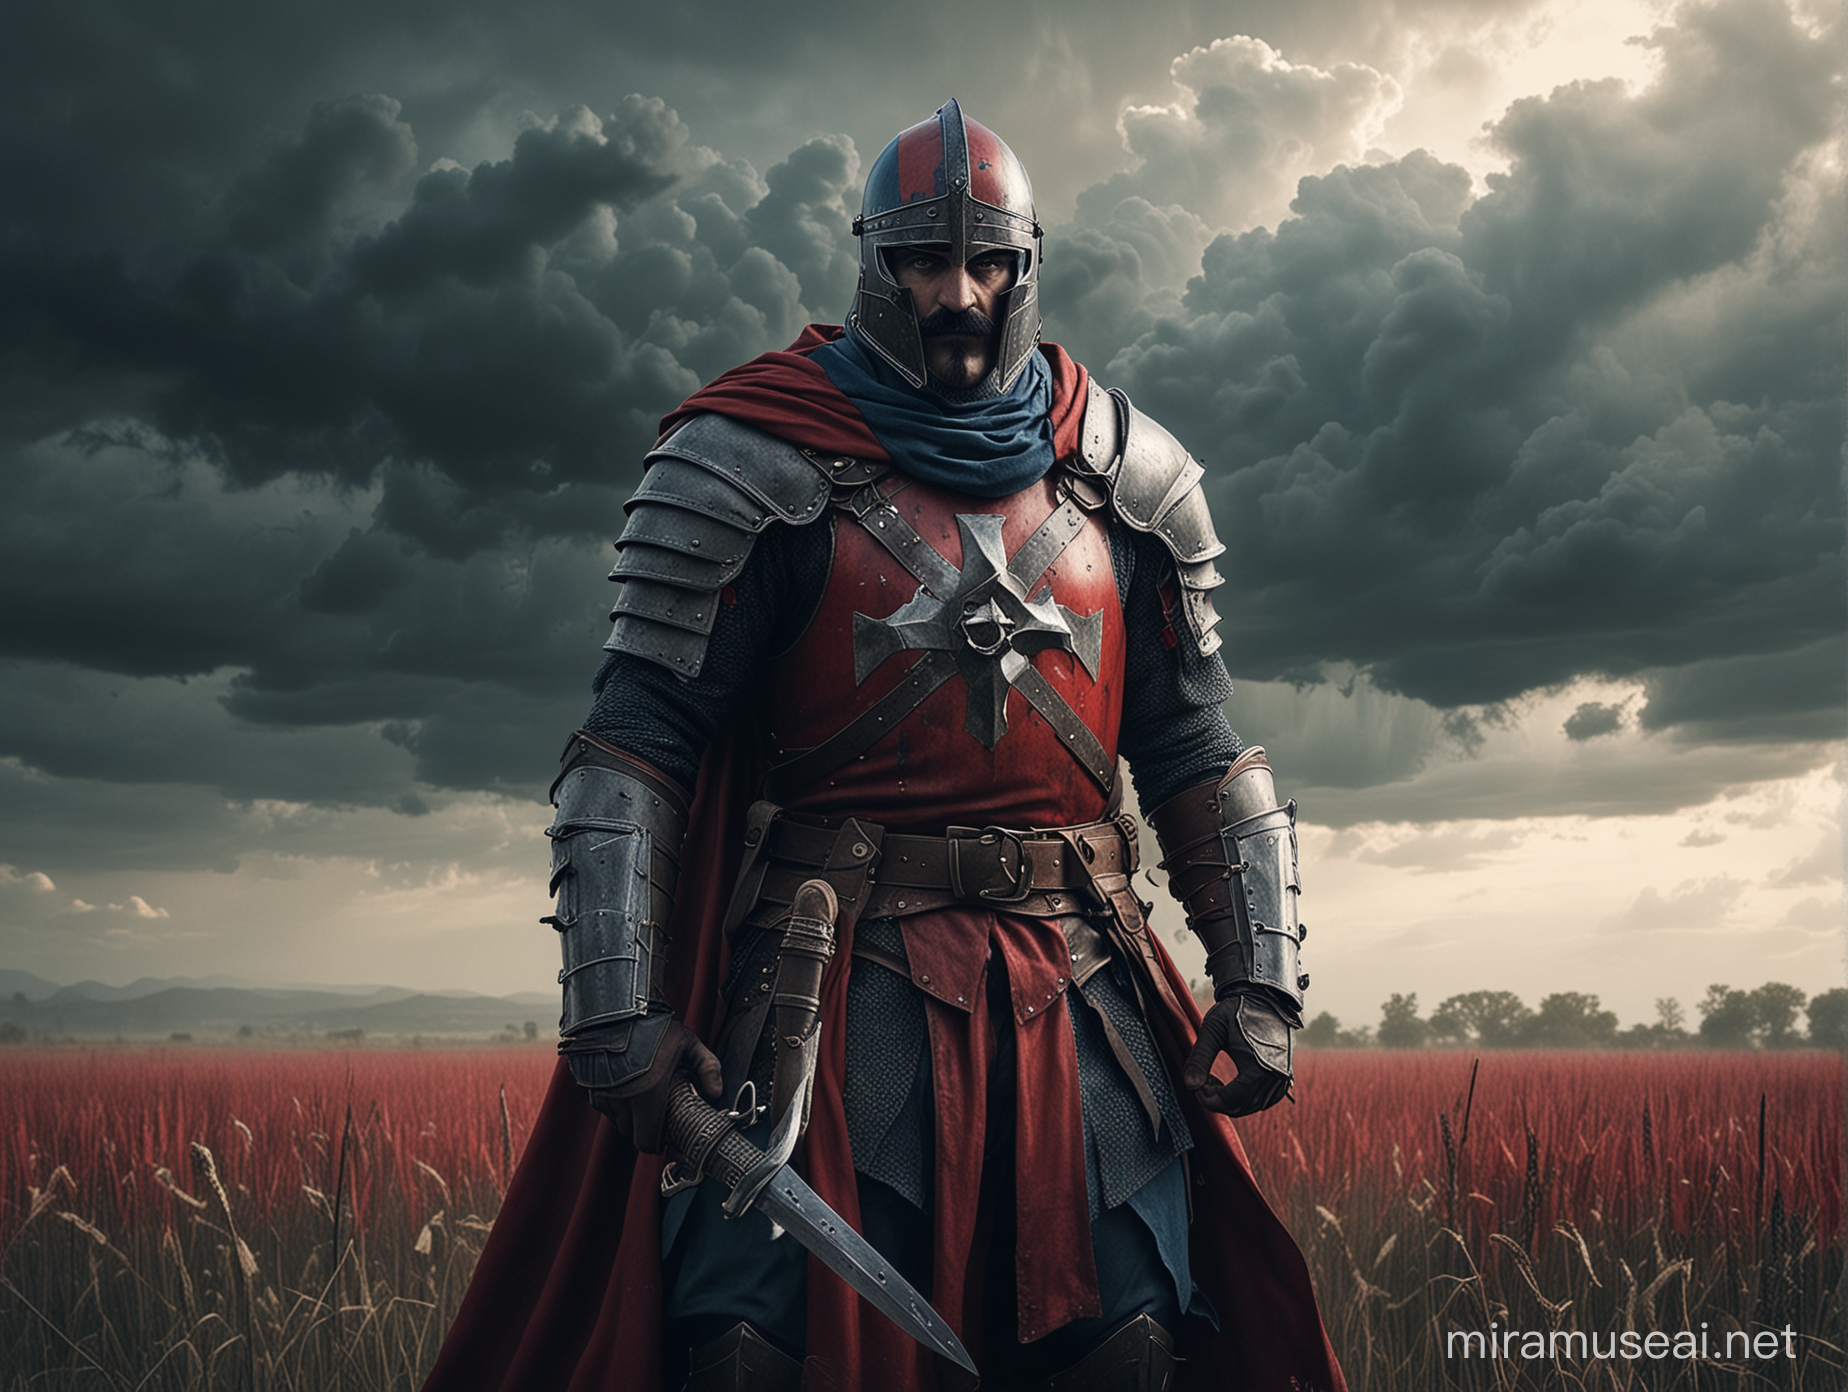 Knight Templar Warrior in Dramatic Stormy Field